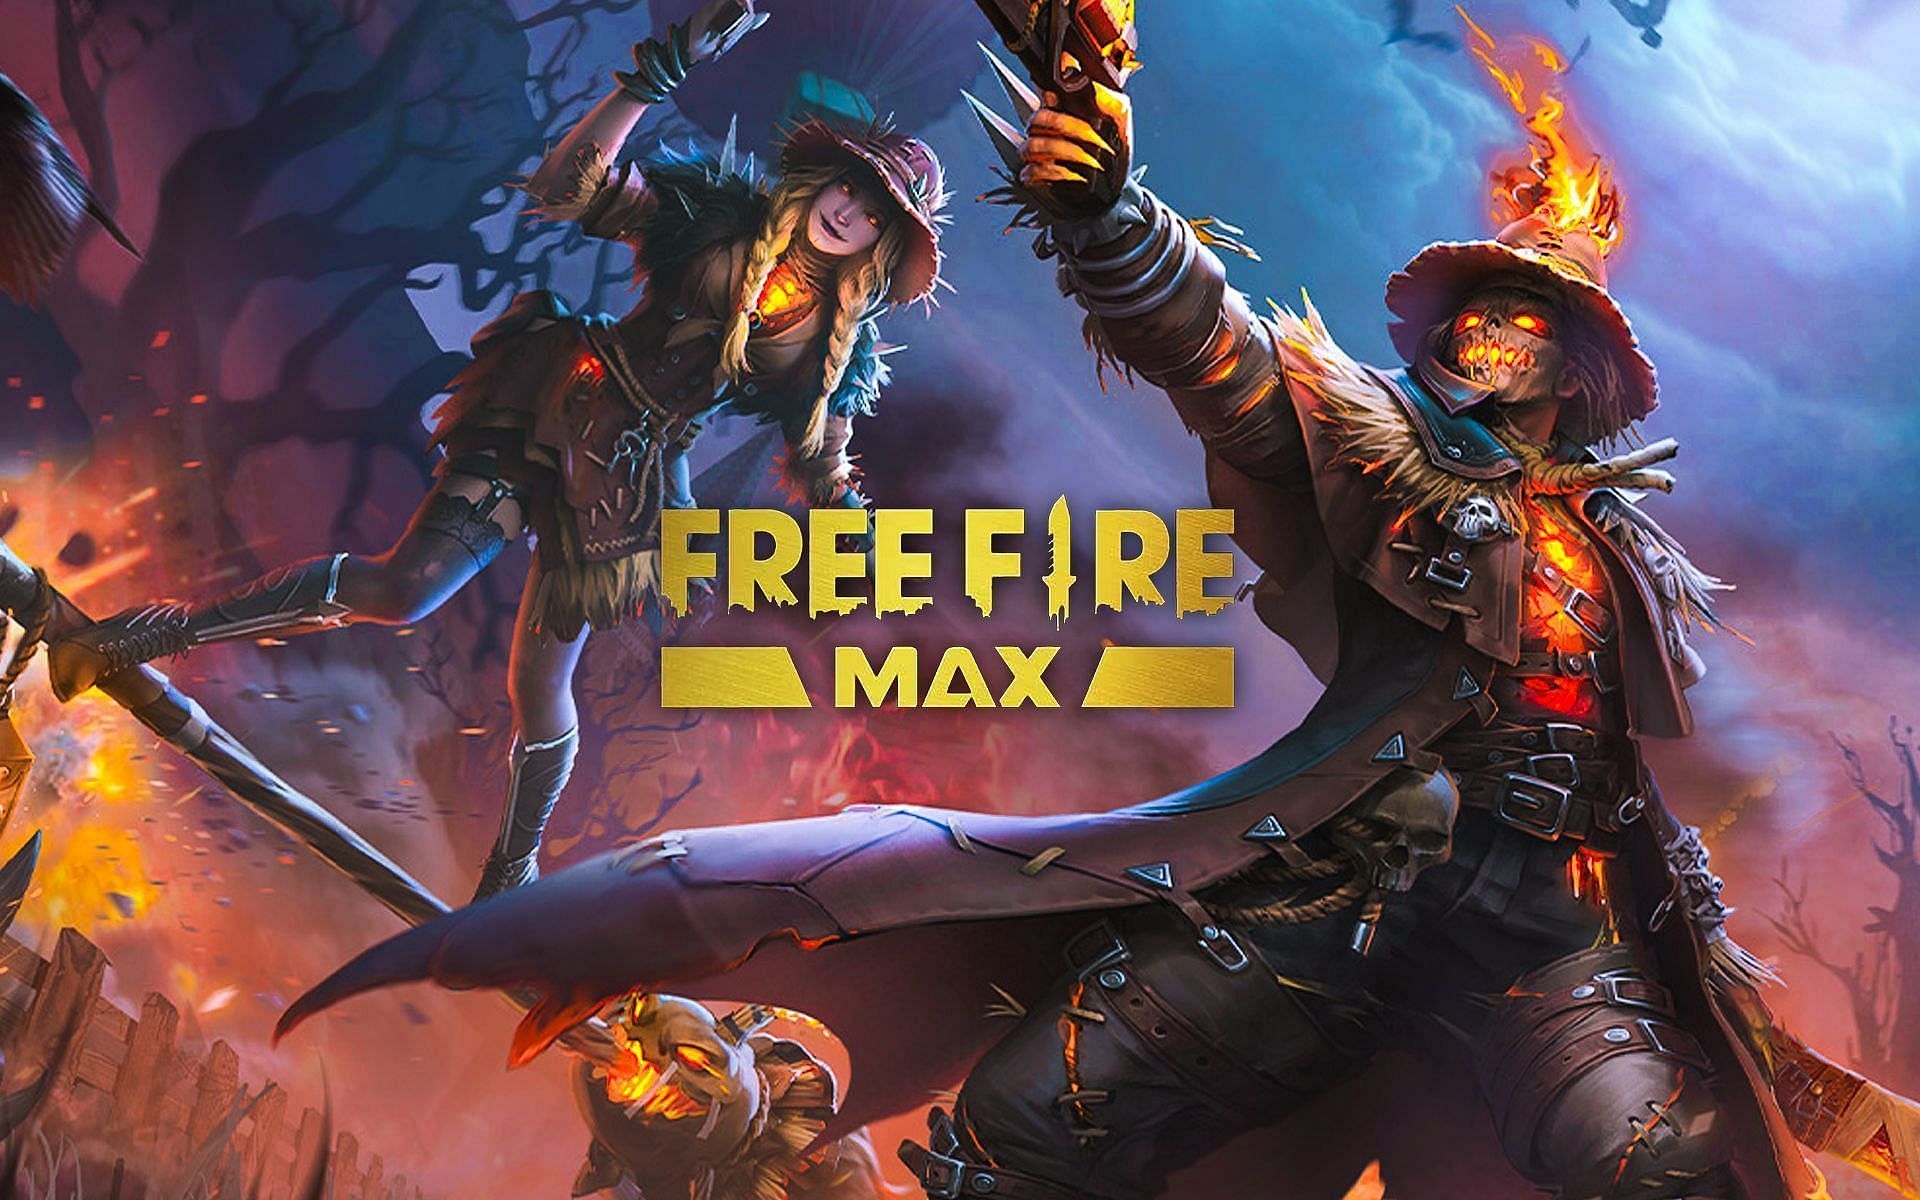 Garena Free Fire Max (Image : Garena)